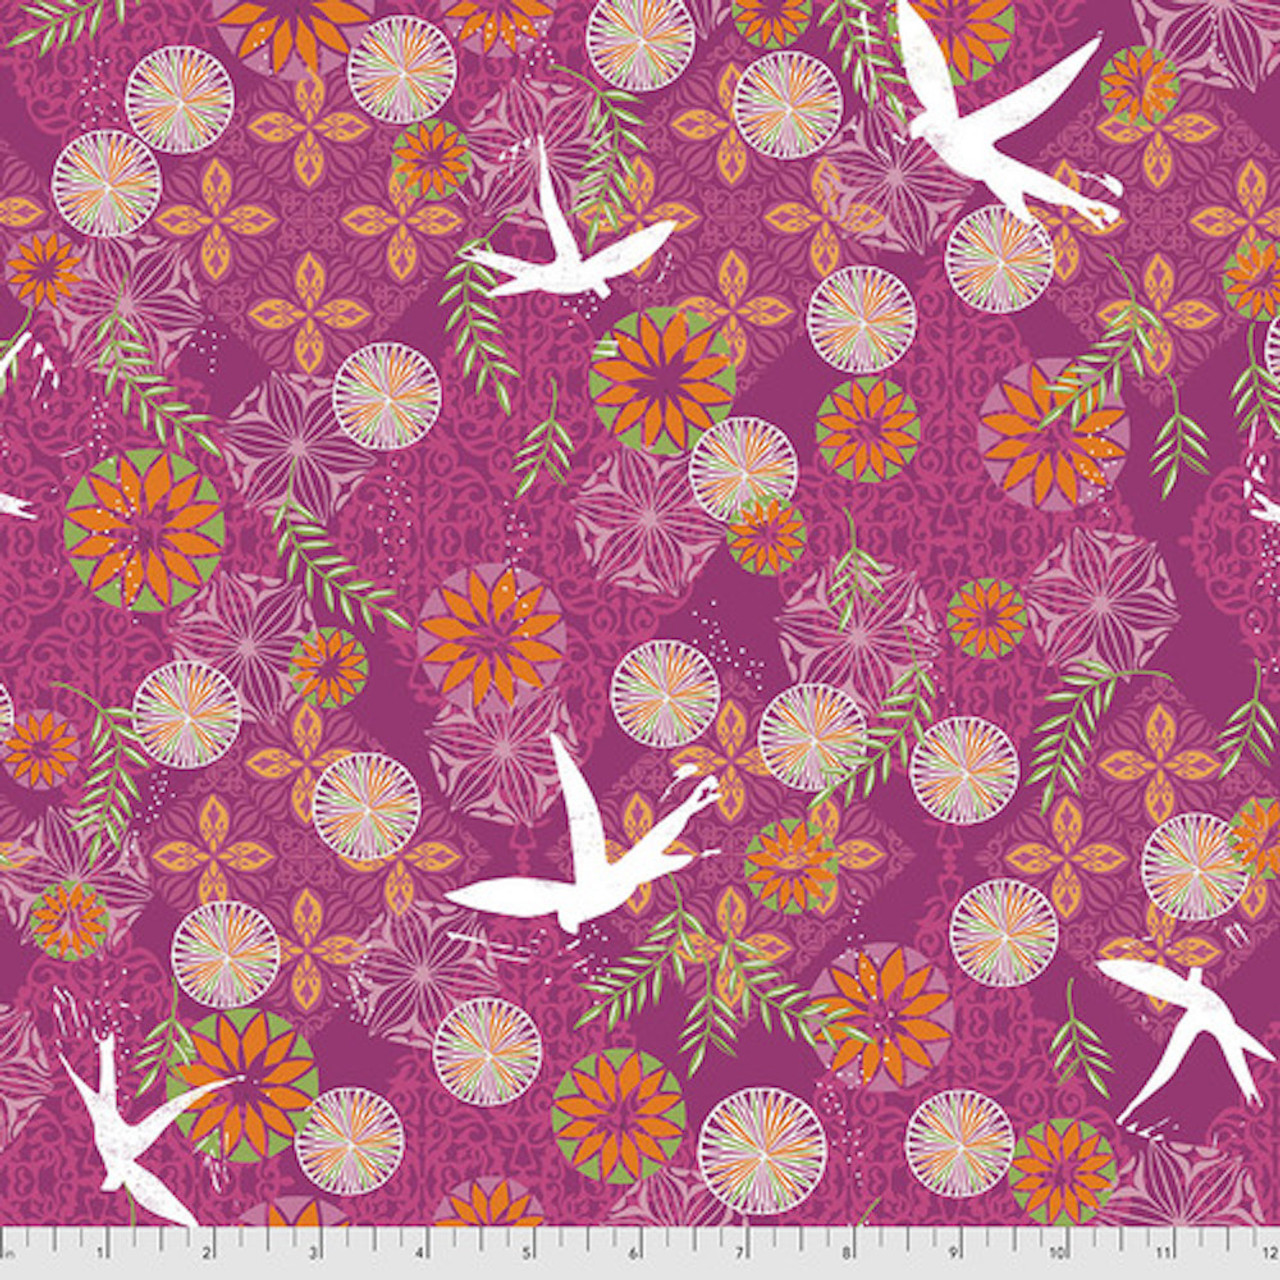 Free Spirit Valori Wells Enchanted Birds Pomegranate Cotton Fabric By The Yard